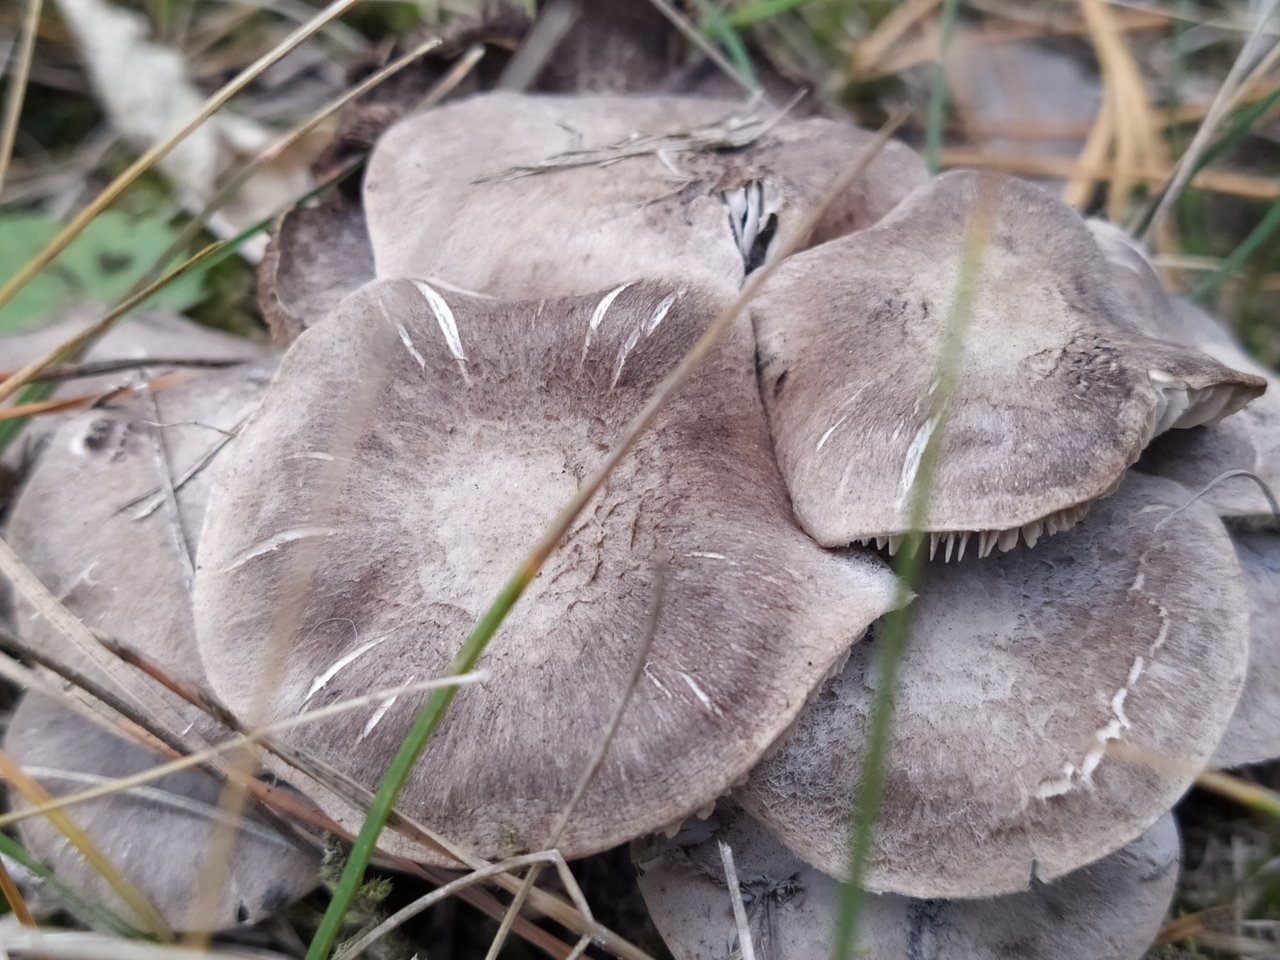 последние осенние грибы фото и название